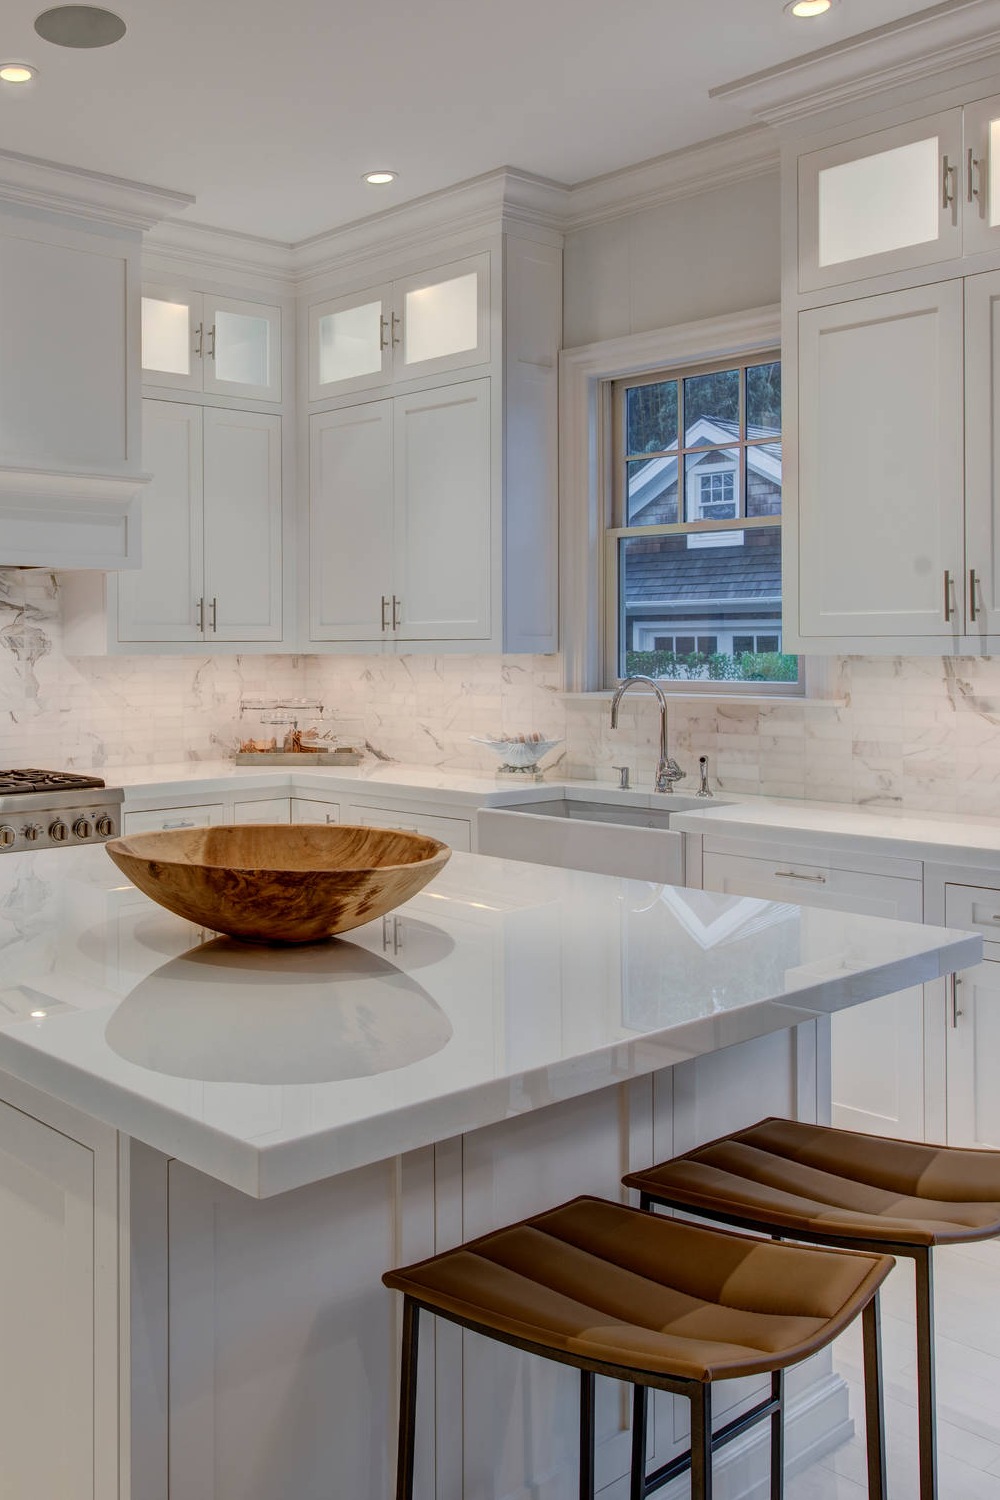 Mitered Edge Countertops Material Granite Countertop White Kitchen